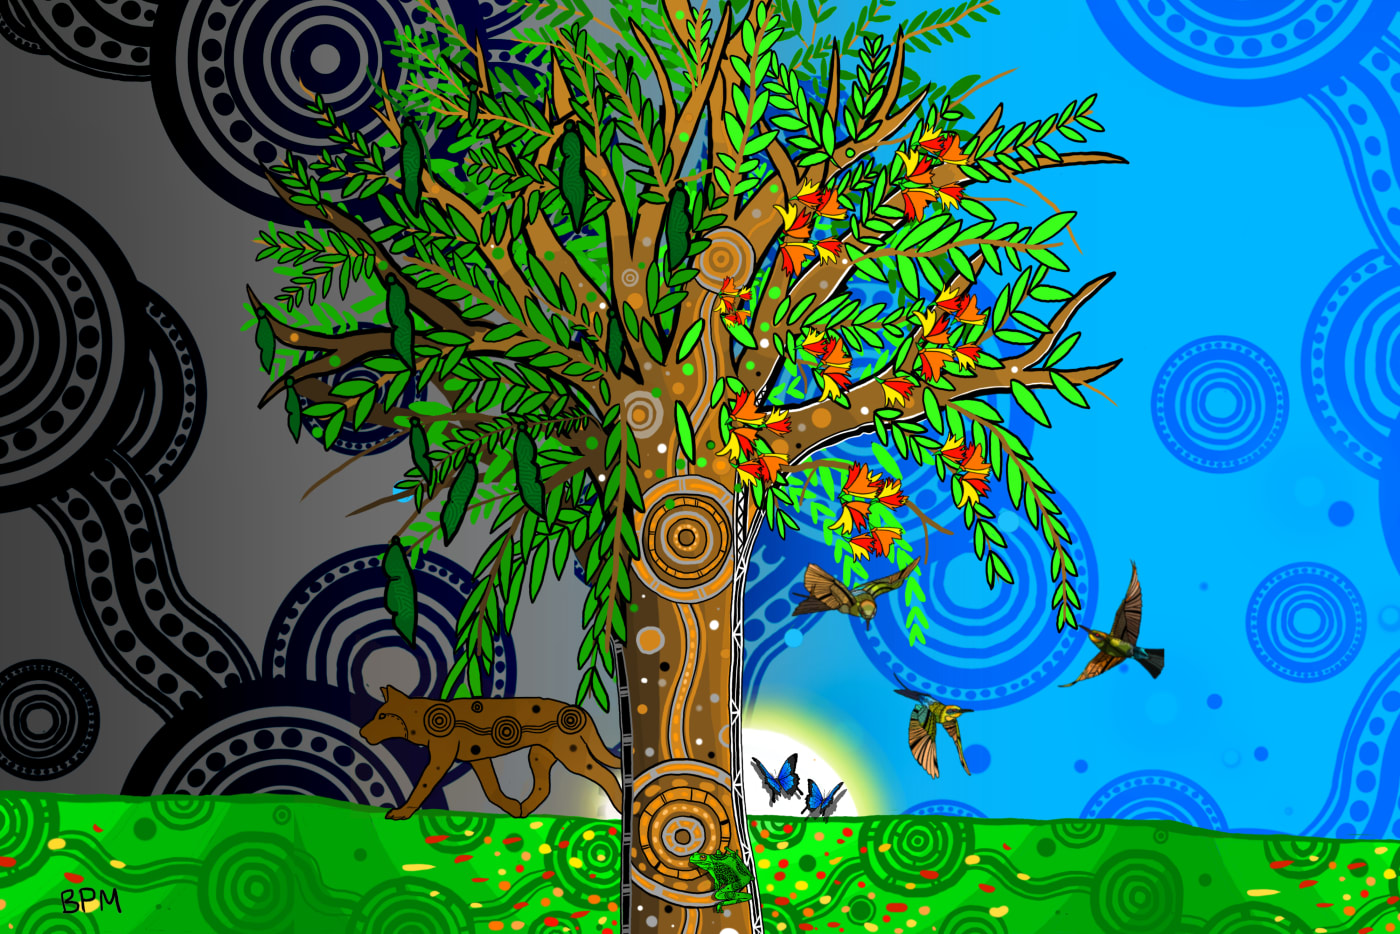 The Black Bean Tree by Jirrbal artist Beau Pennefather Motlop